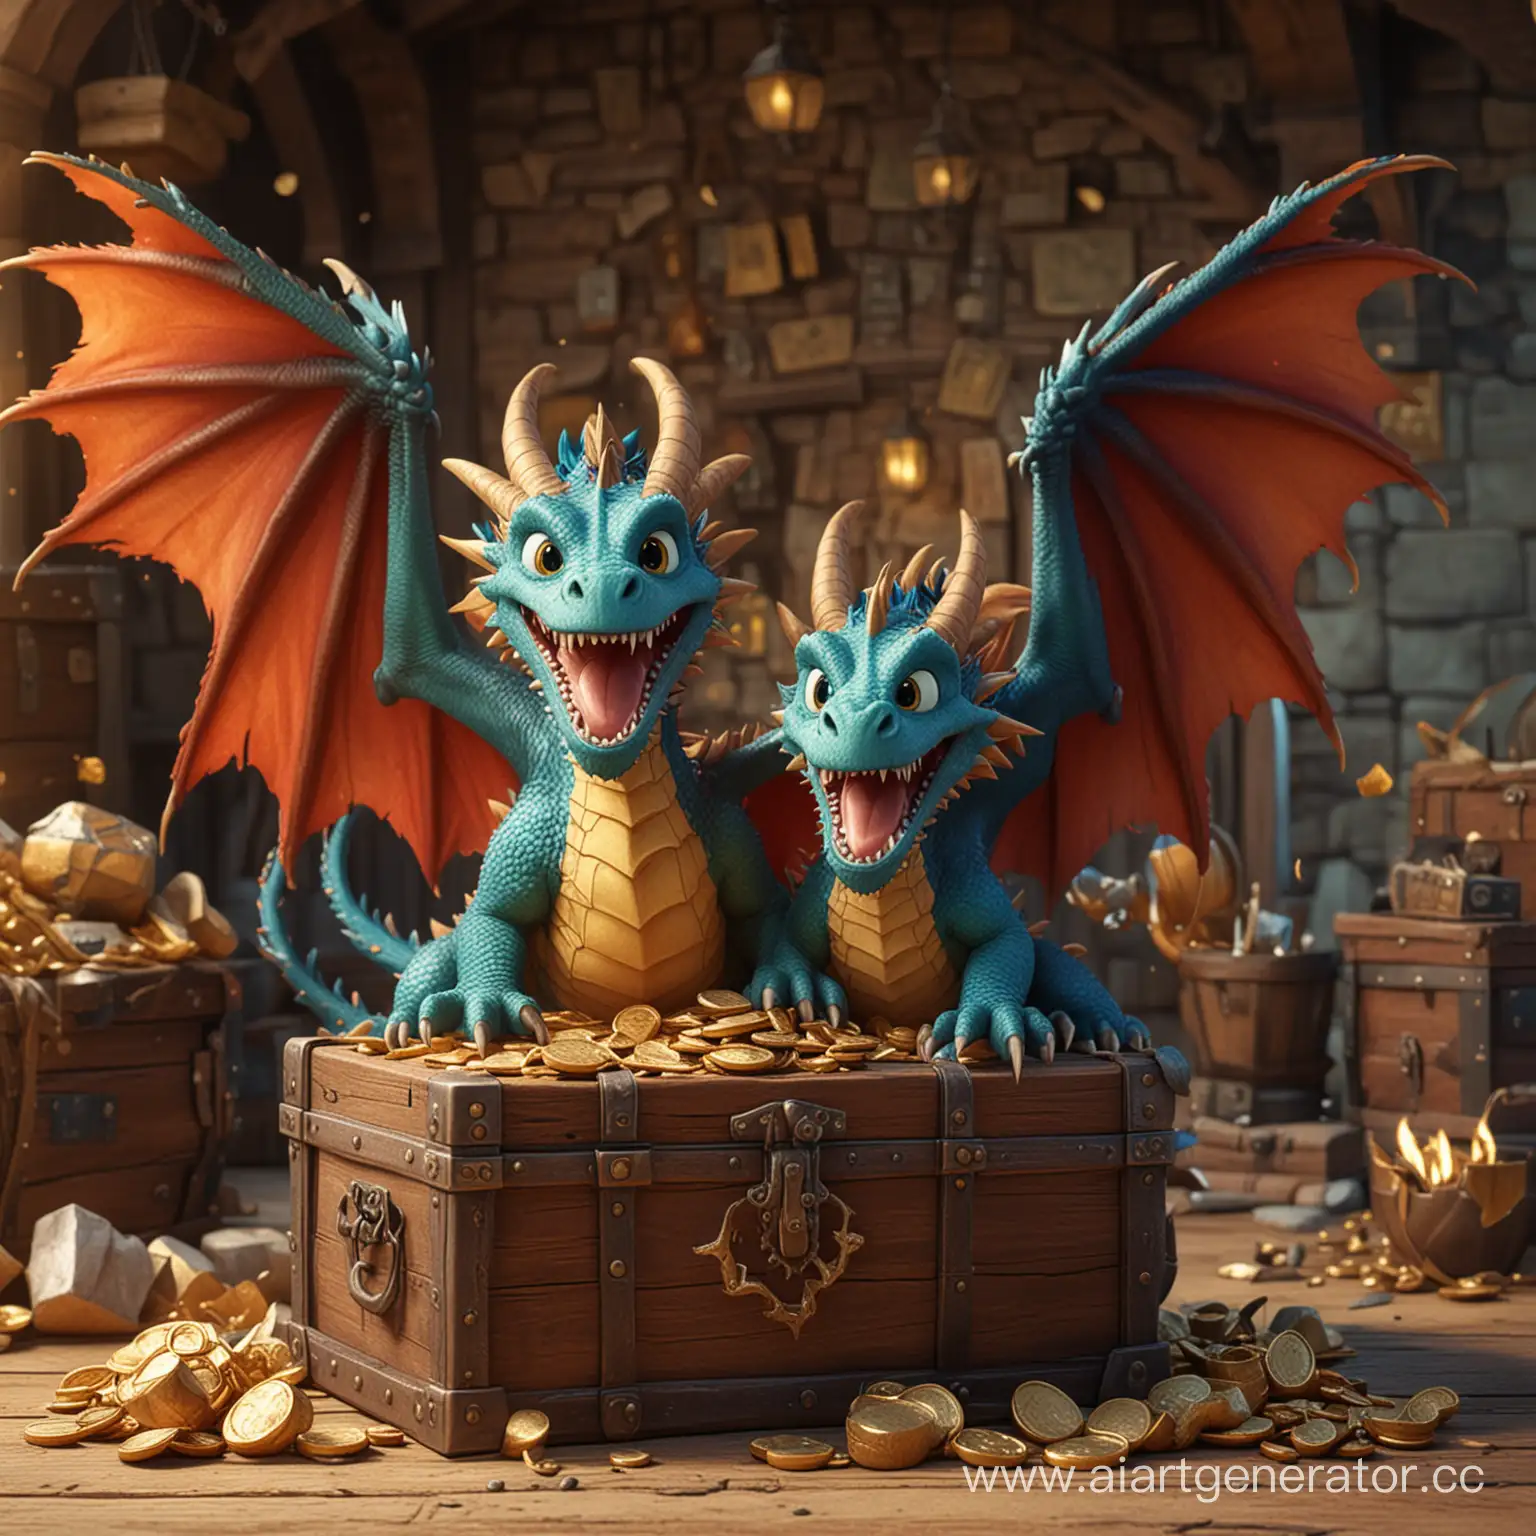 Joyful-ThreeHeaded-Dragon-with-Treasure-Chest-in-Pixar-Style